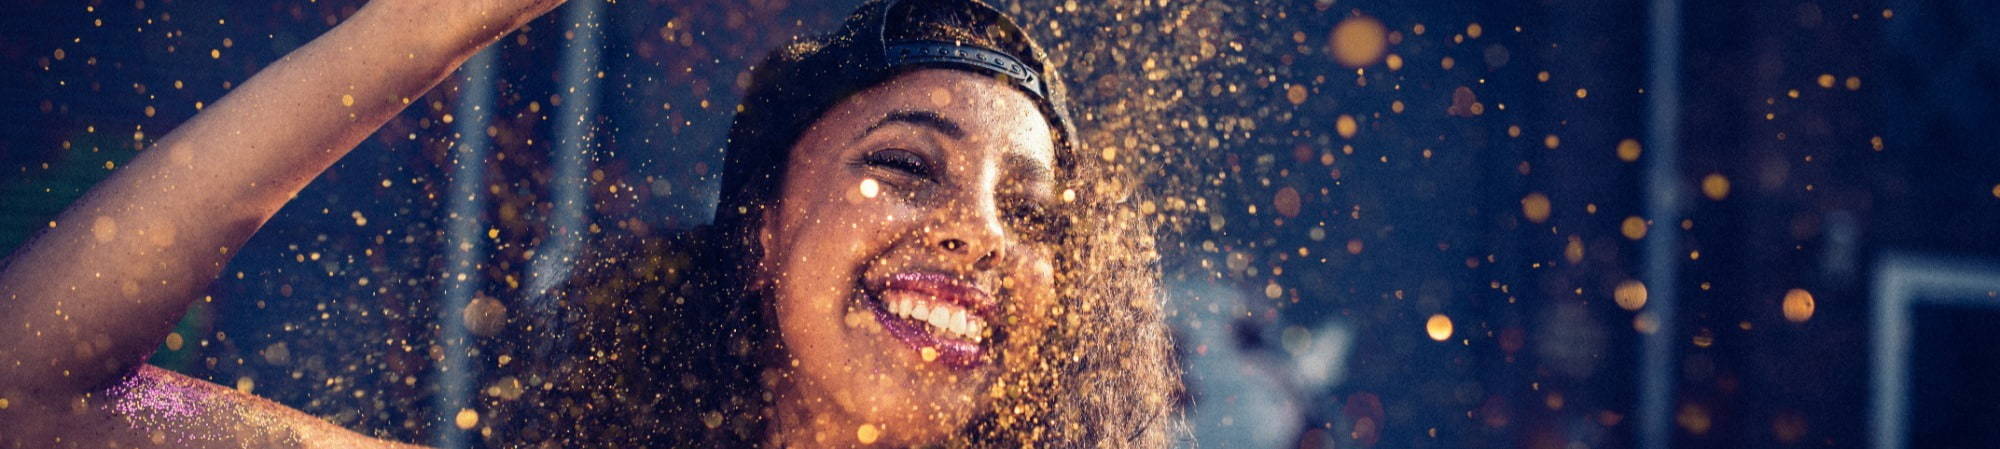 Smiling woman wearing backwards baseball cap throwing gold glitter